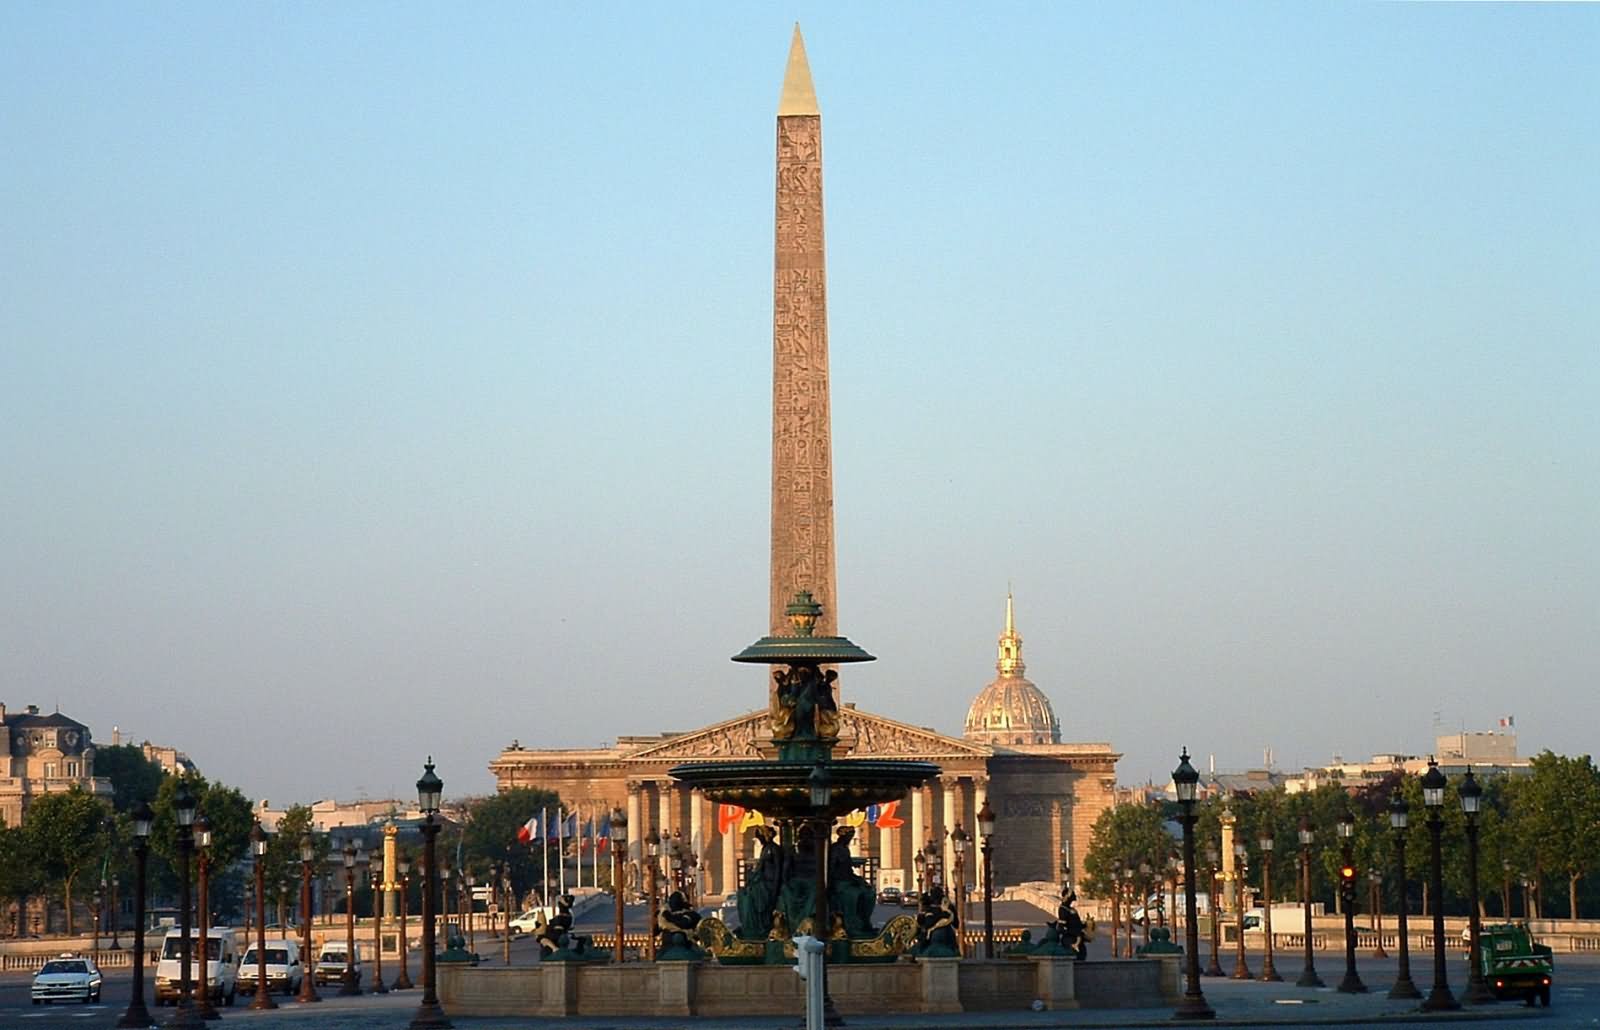 Fountain And Obelisk At Place de la Concorde